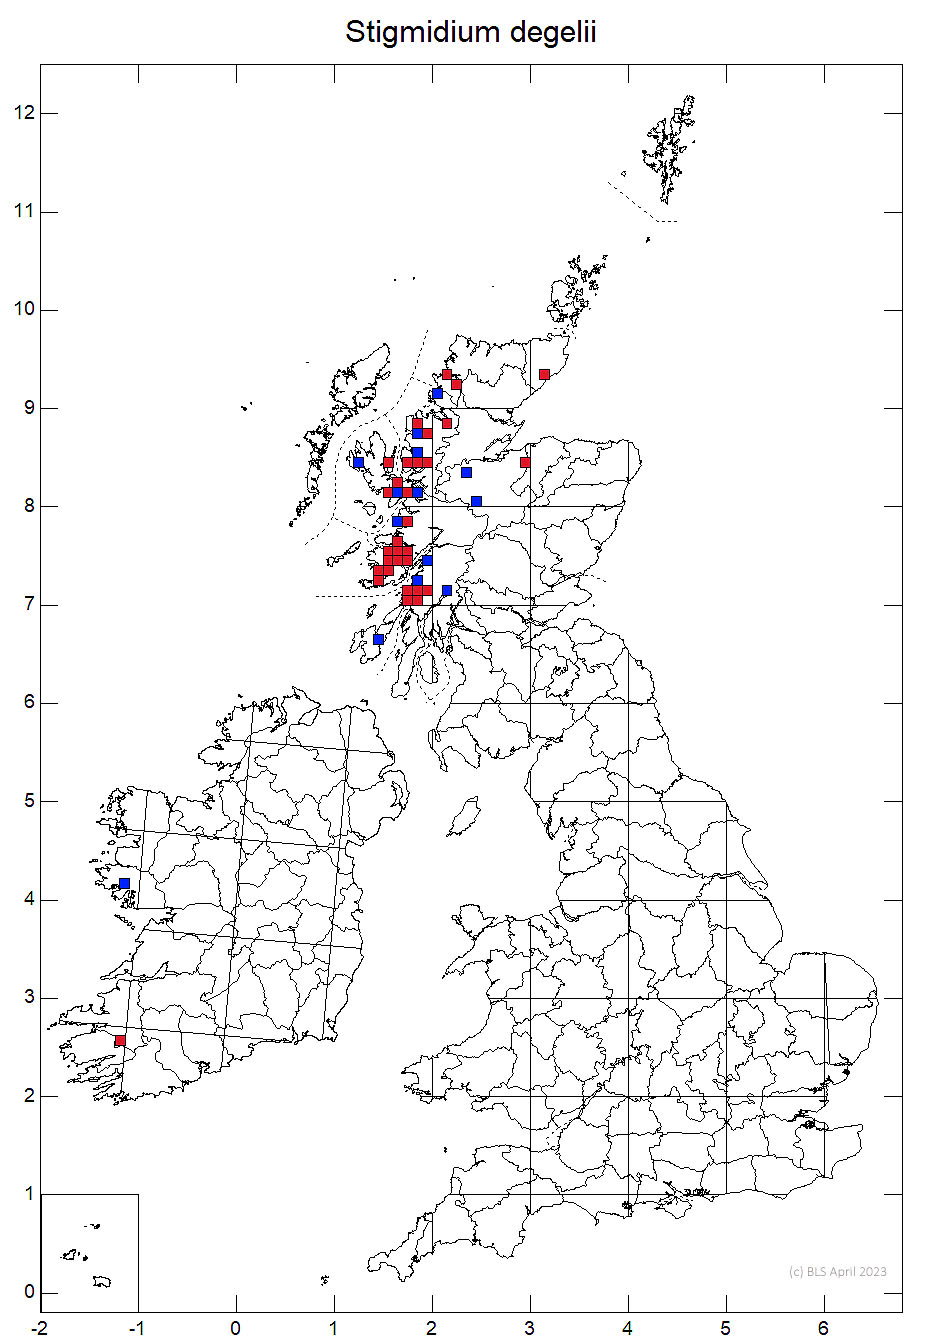 Stigmidium degelii 10km sq distribution map